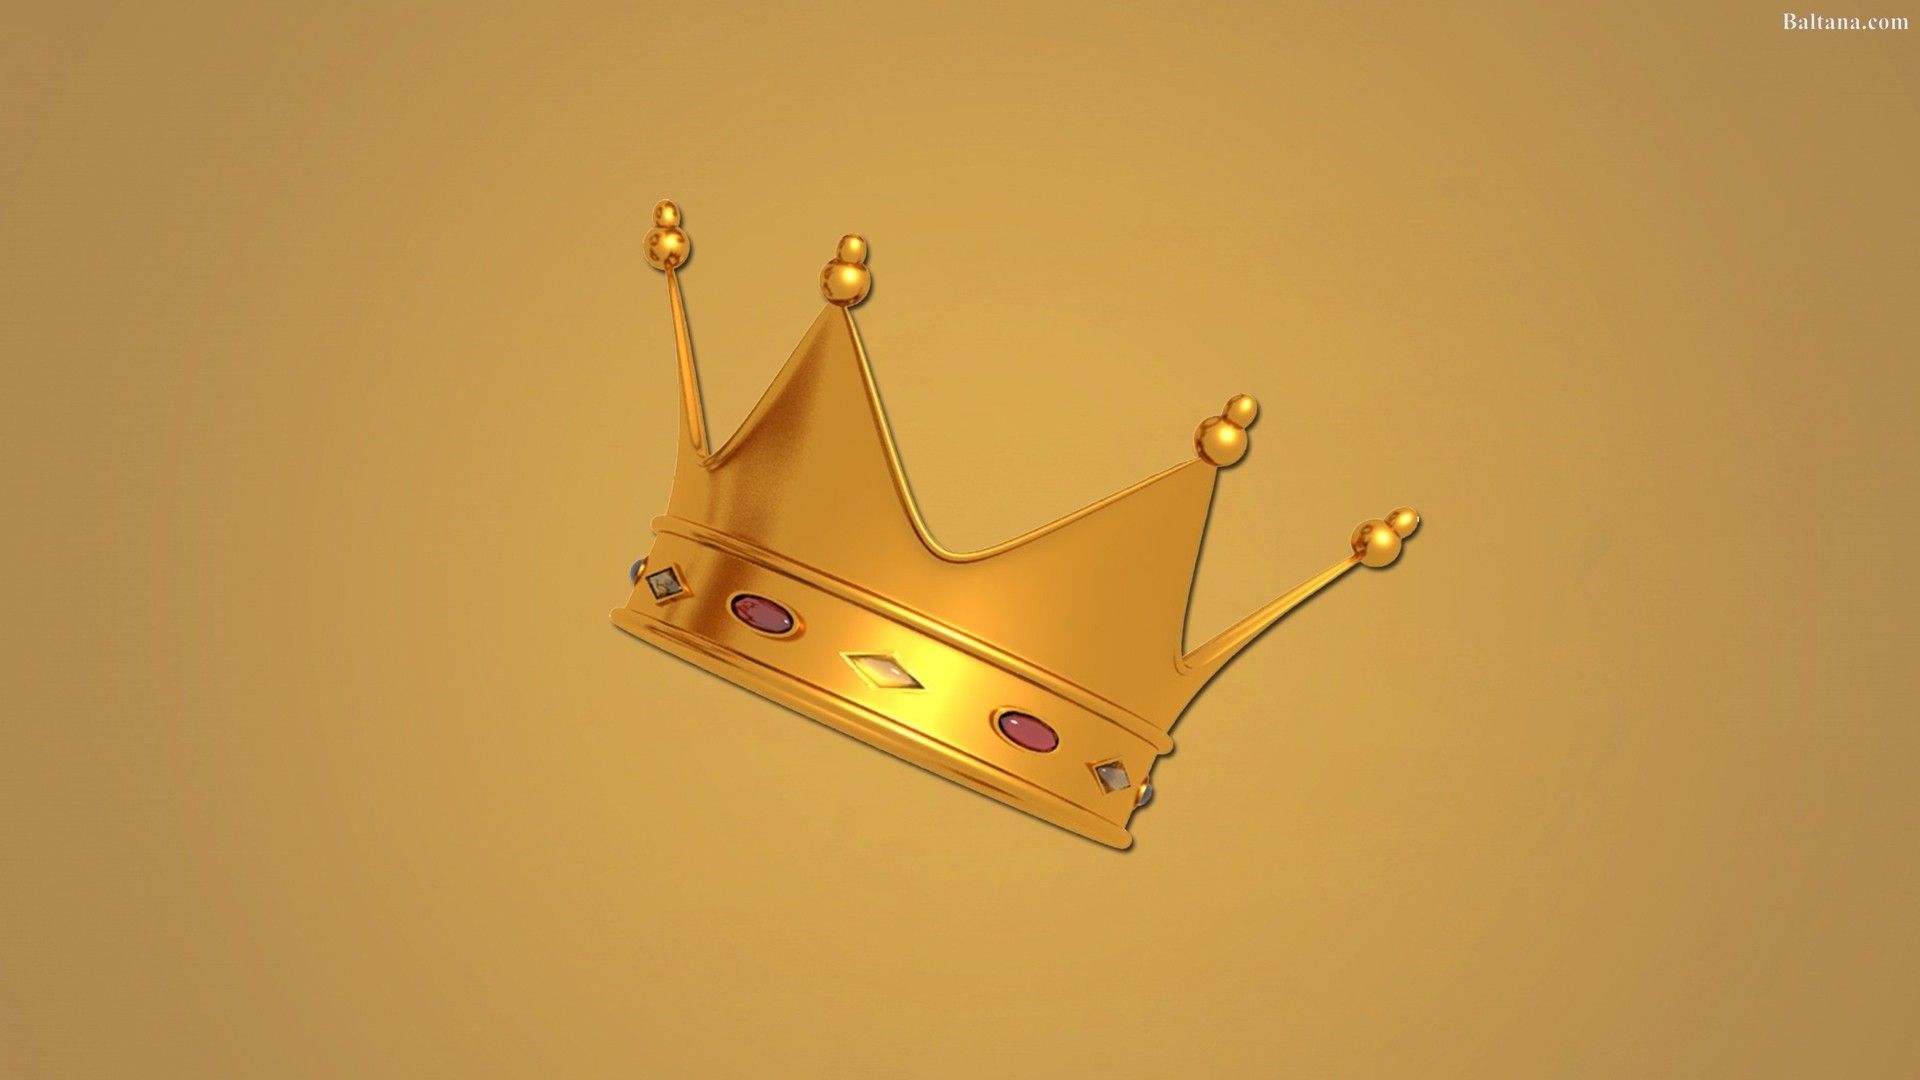 Golden crown on a golden background wallpaper - Digital Art wallpapers - #13661 - Crown